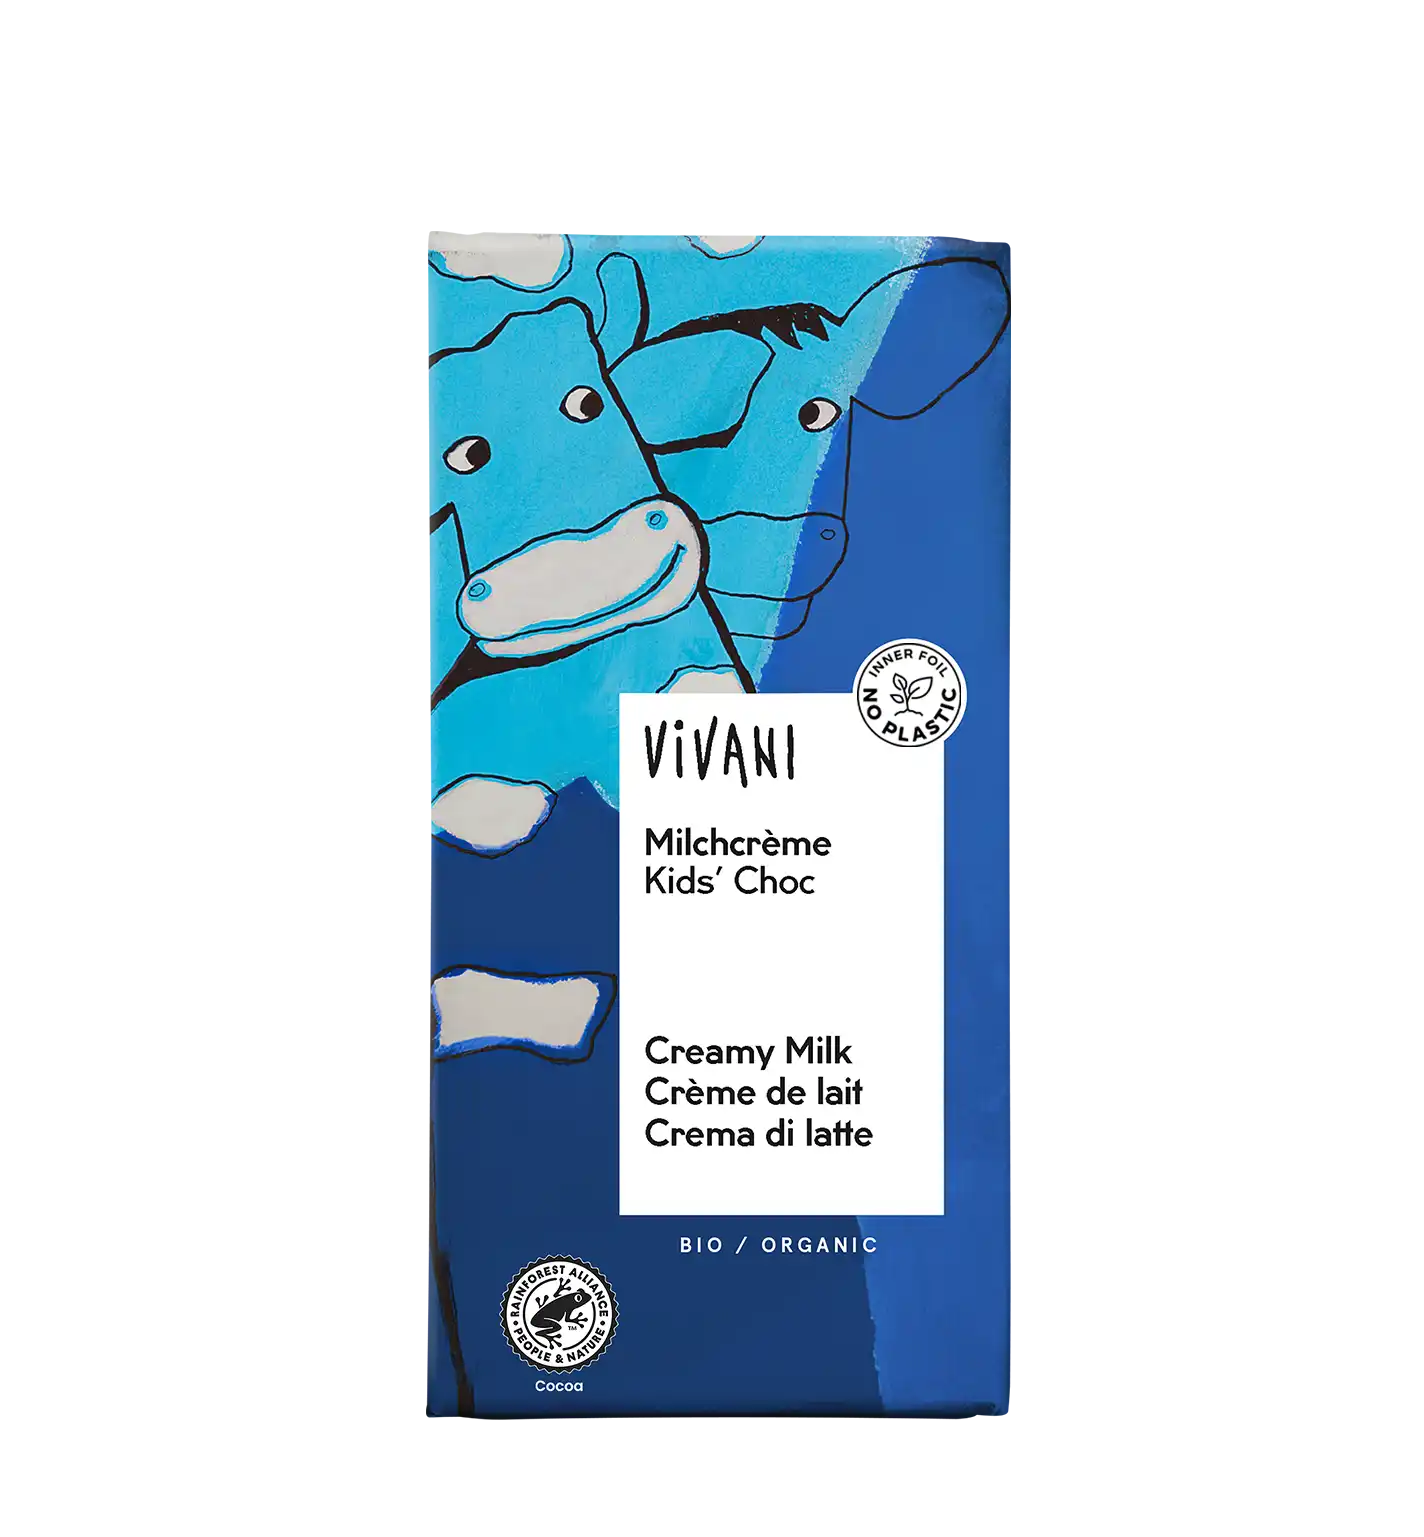 VIVANI’s organic Kids Chocolate with creamy milk filling